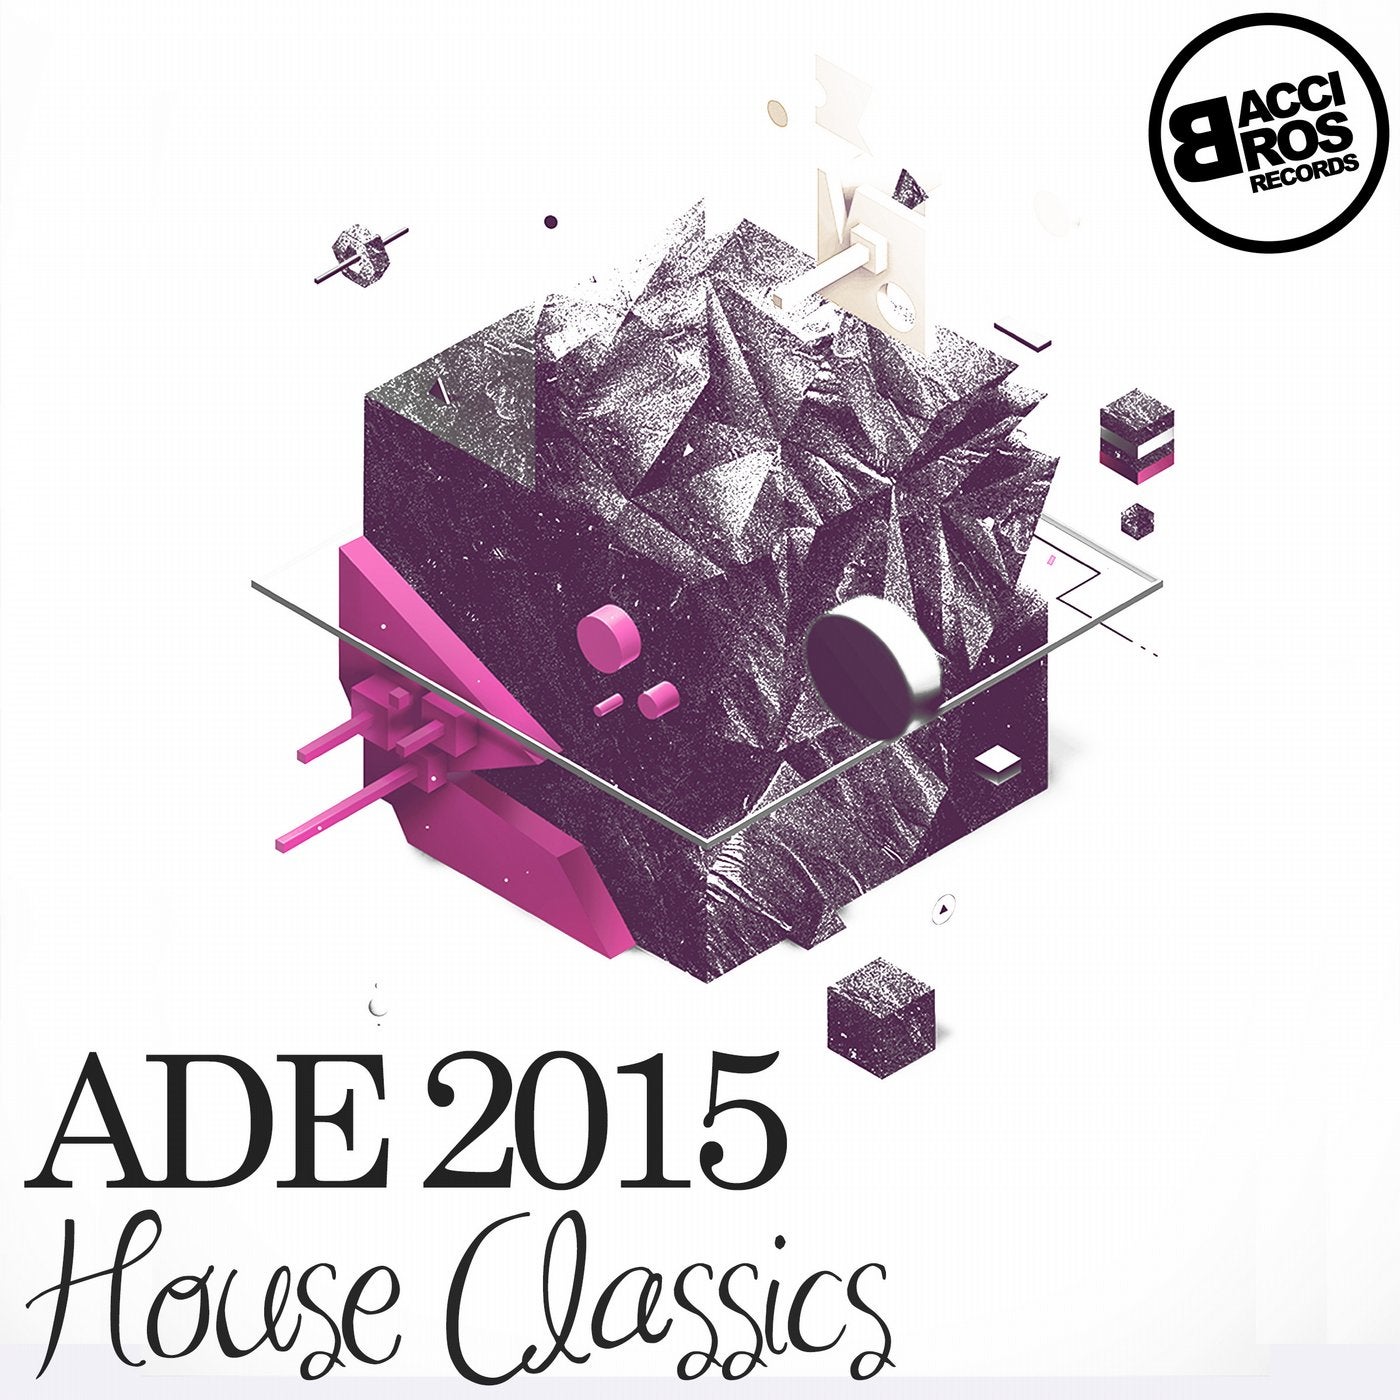 ADE 2015 House Classics